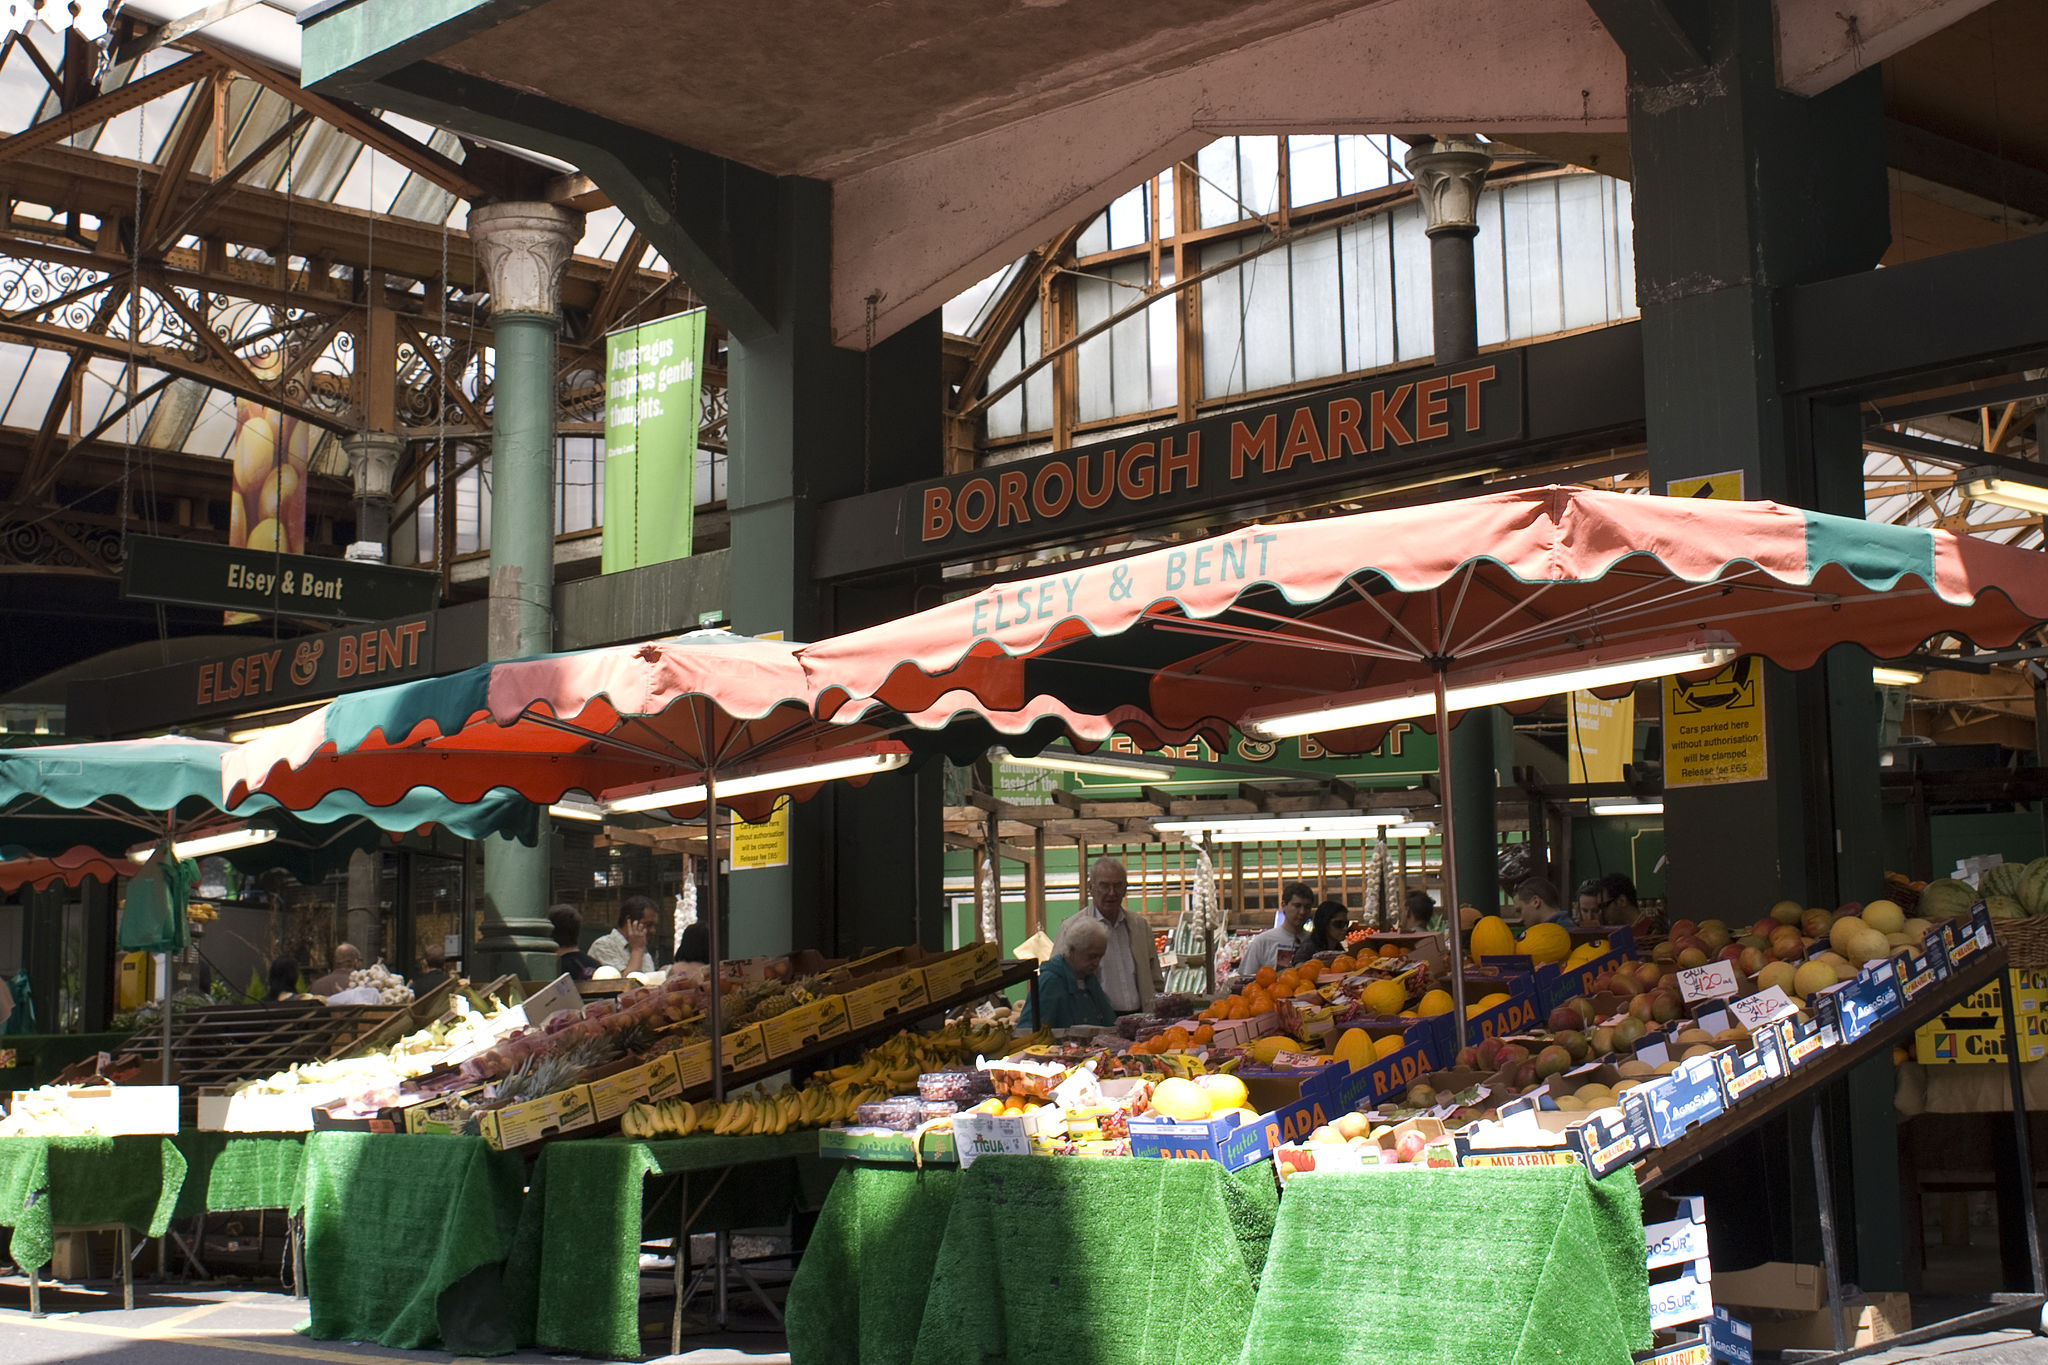 Borough Market